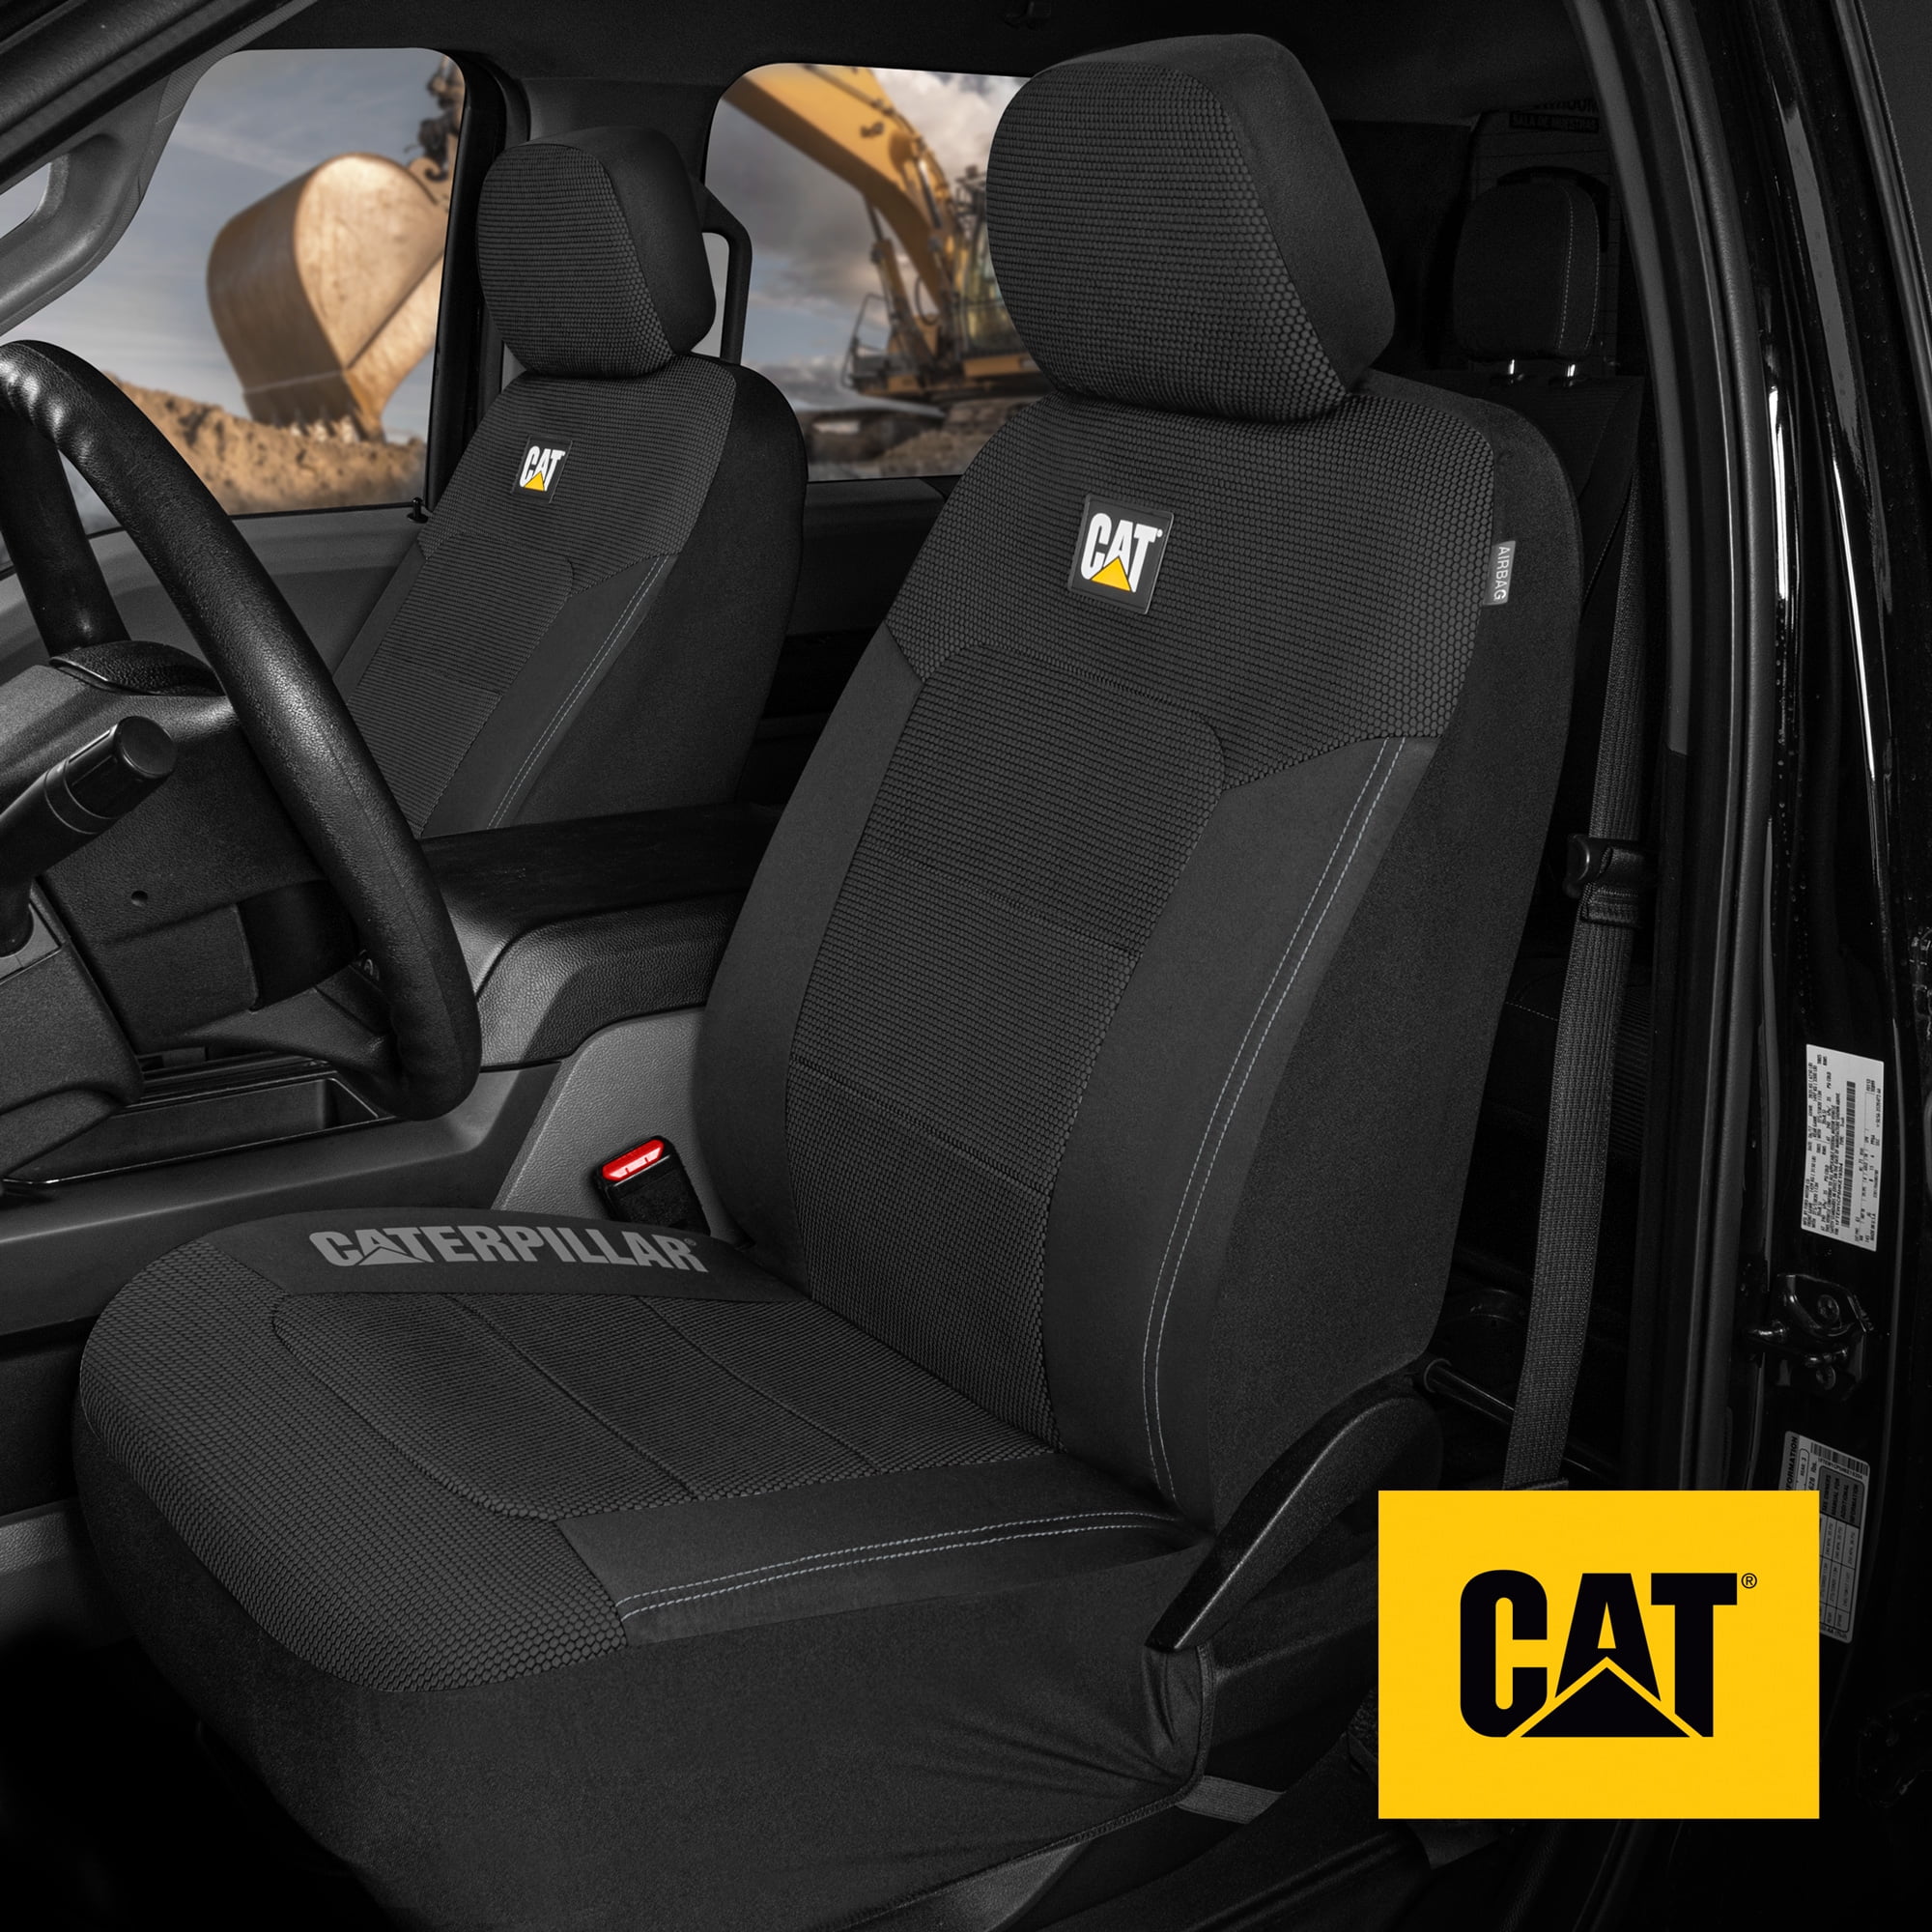 Caterpillar MeshFlex Automotive Seat Covers for Cars Trucks and